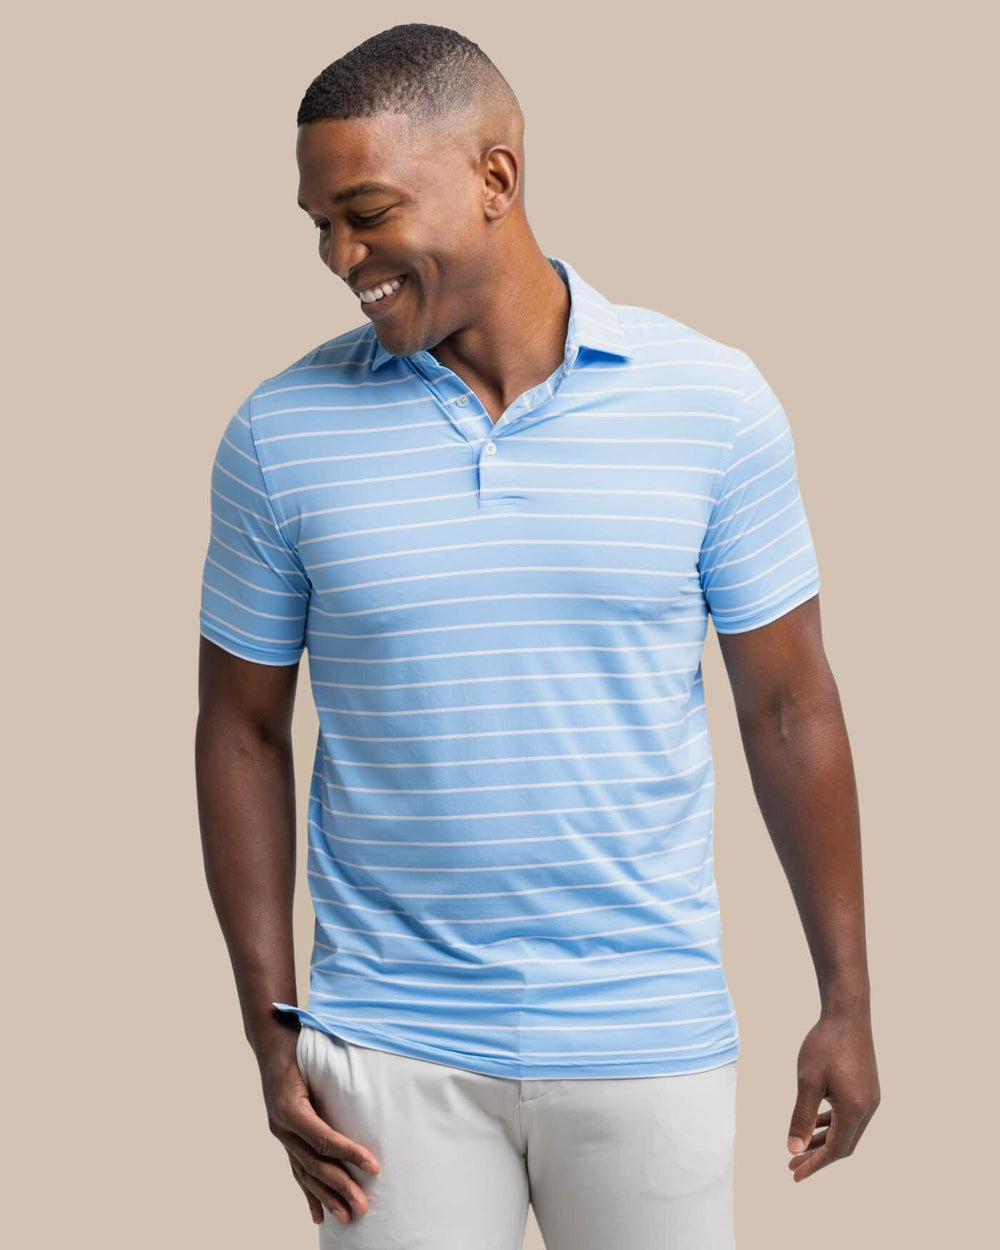 brrr°®eeze Desmond Stripe Polo C_Polo Shirts Southern Tide Rush Blue S 